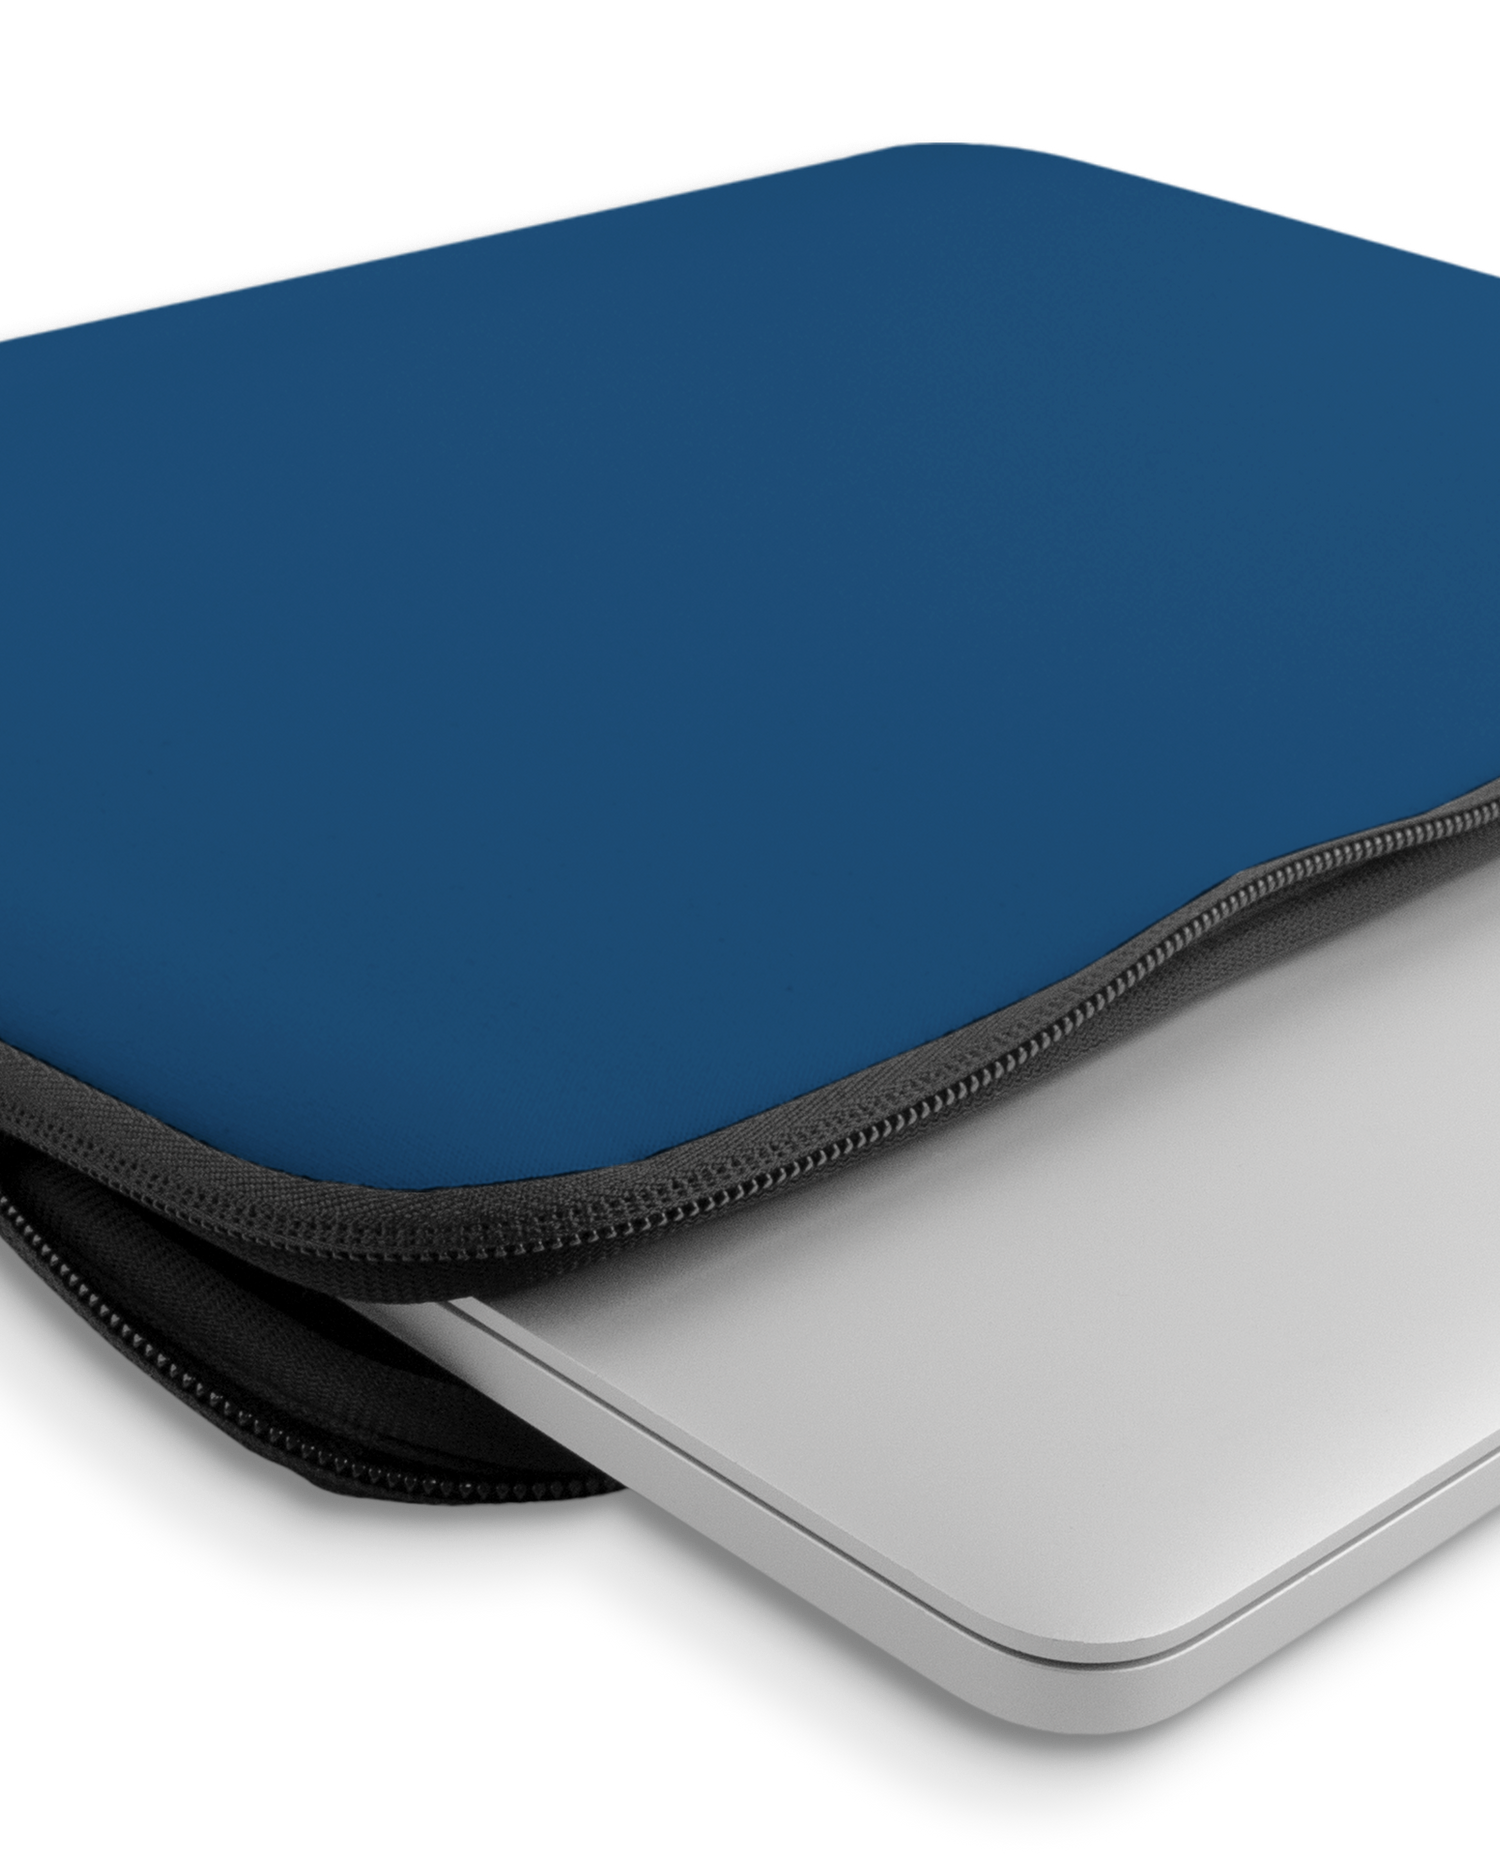 CLASSIC BLUE Laptophülle 14-15 Zoll mit Gerät im Inneren